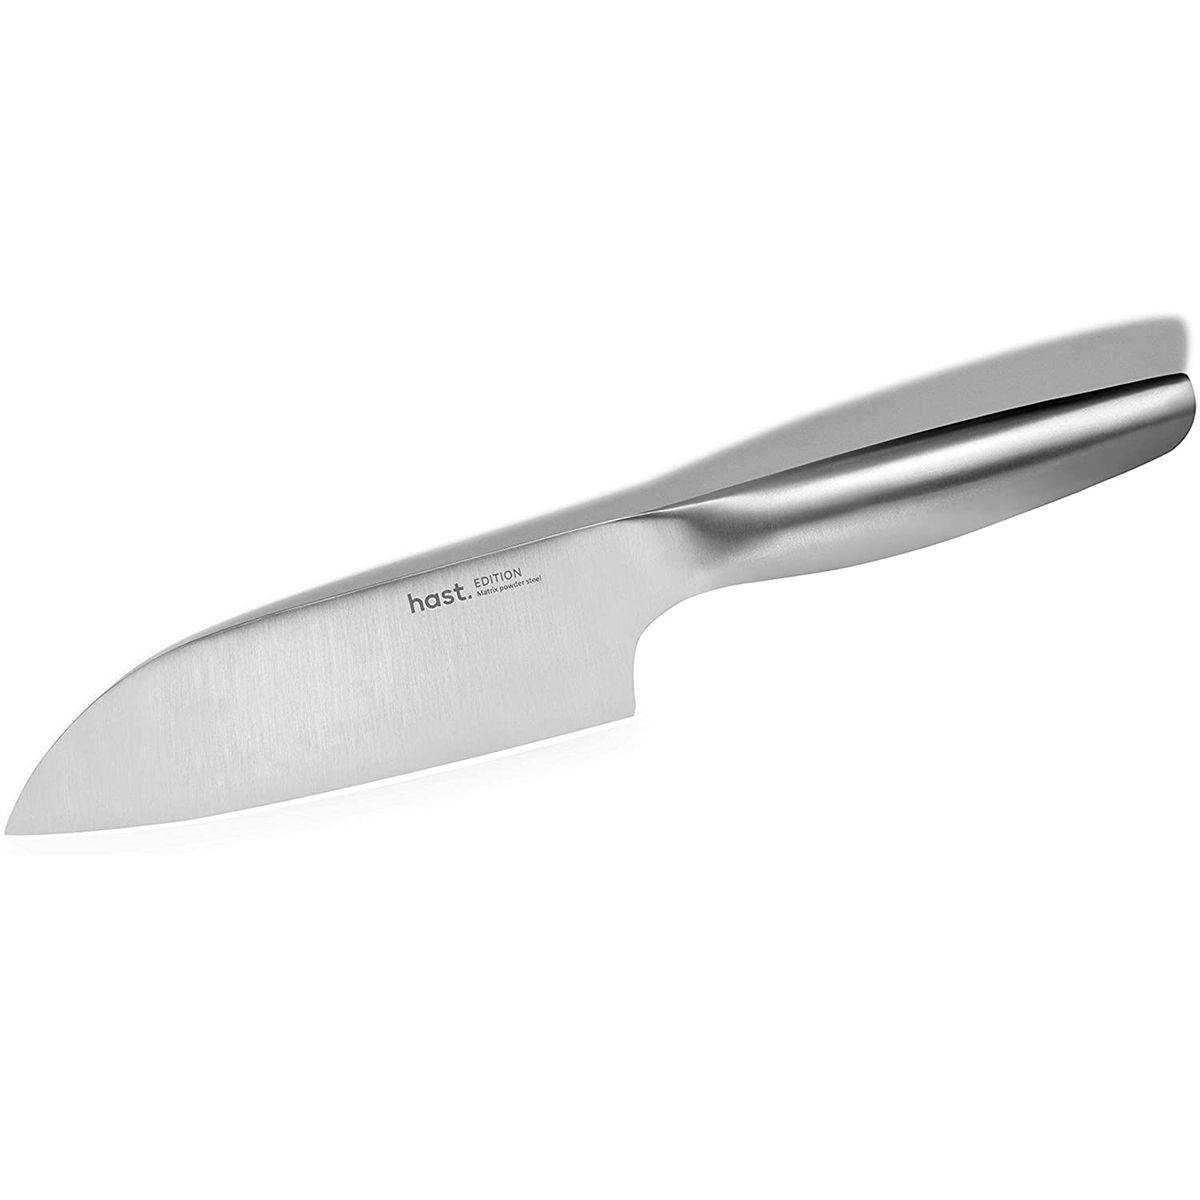 Hast Santoku Knife - 6.3"-High Performance Kitchen Knife